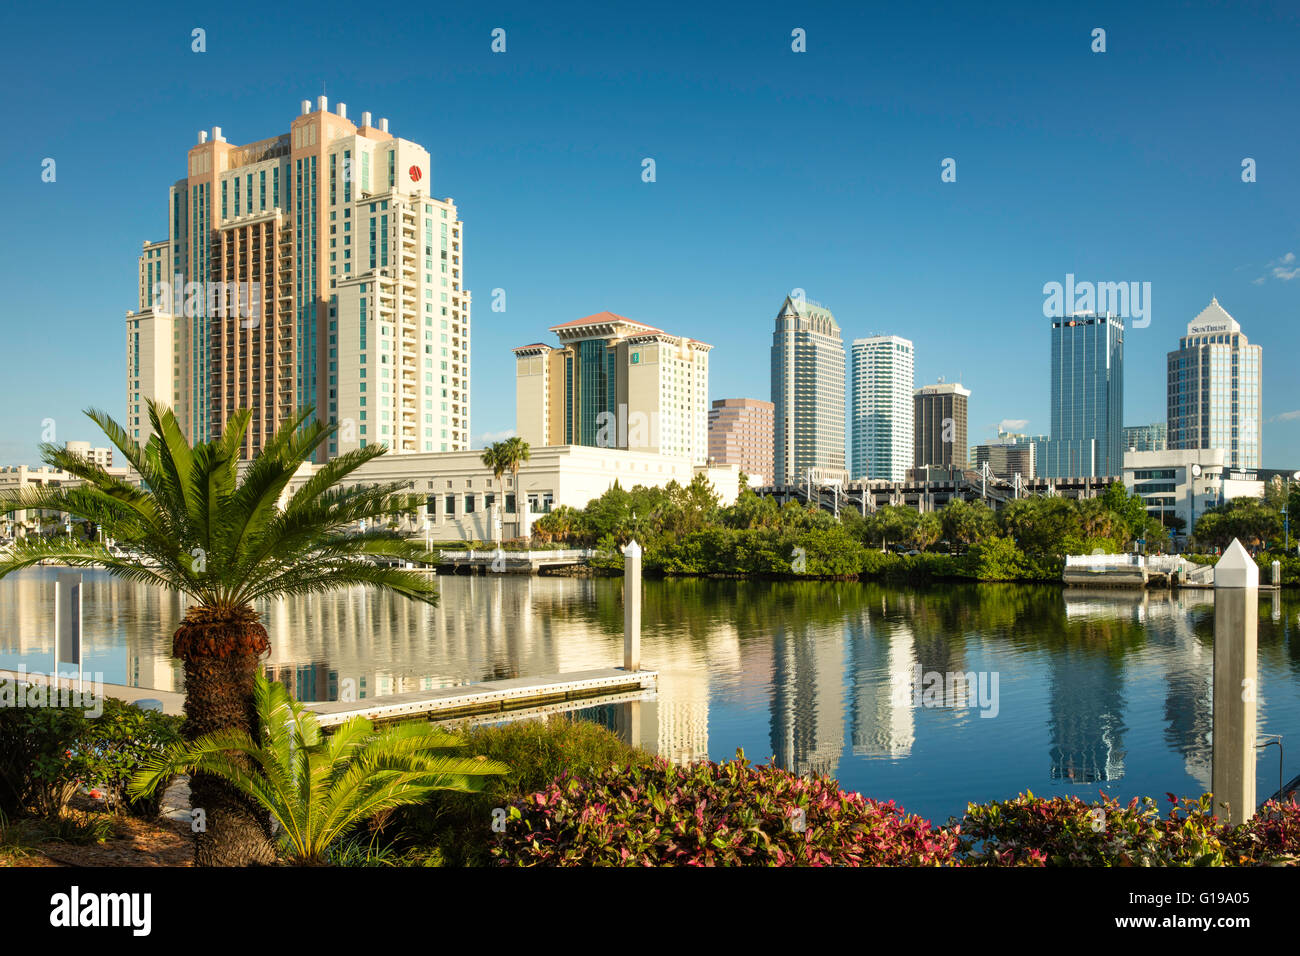 Early morning over the skyline of Tampa, Florida, USA Stock Photo